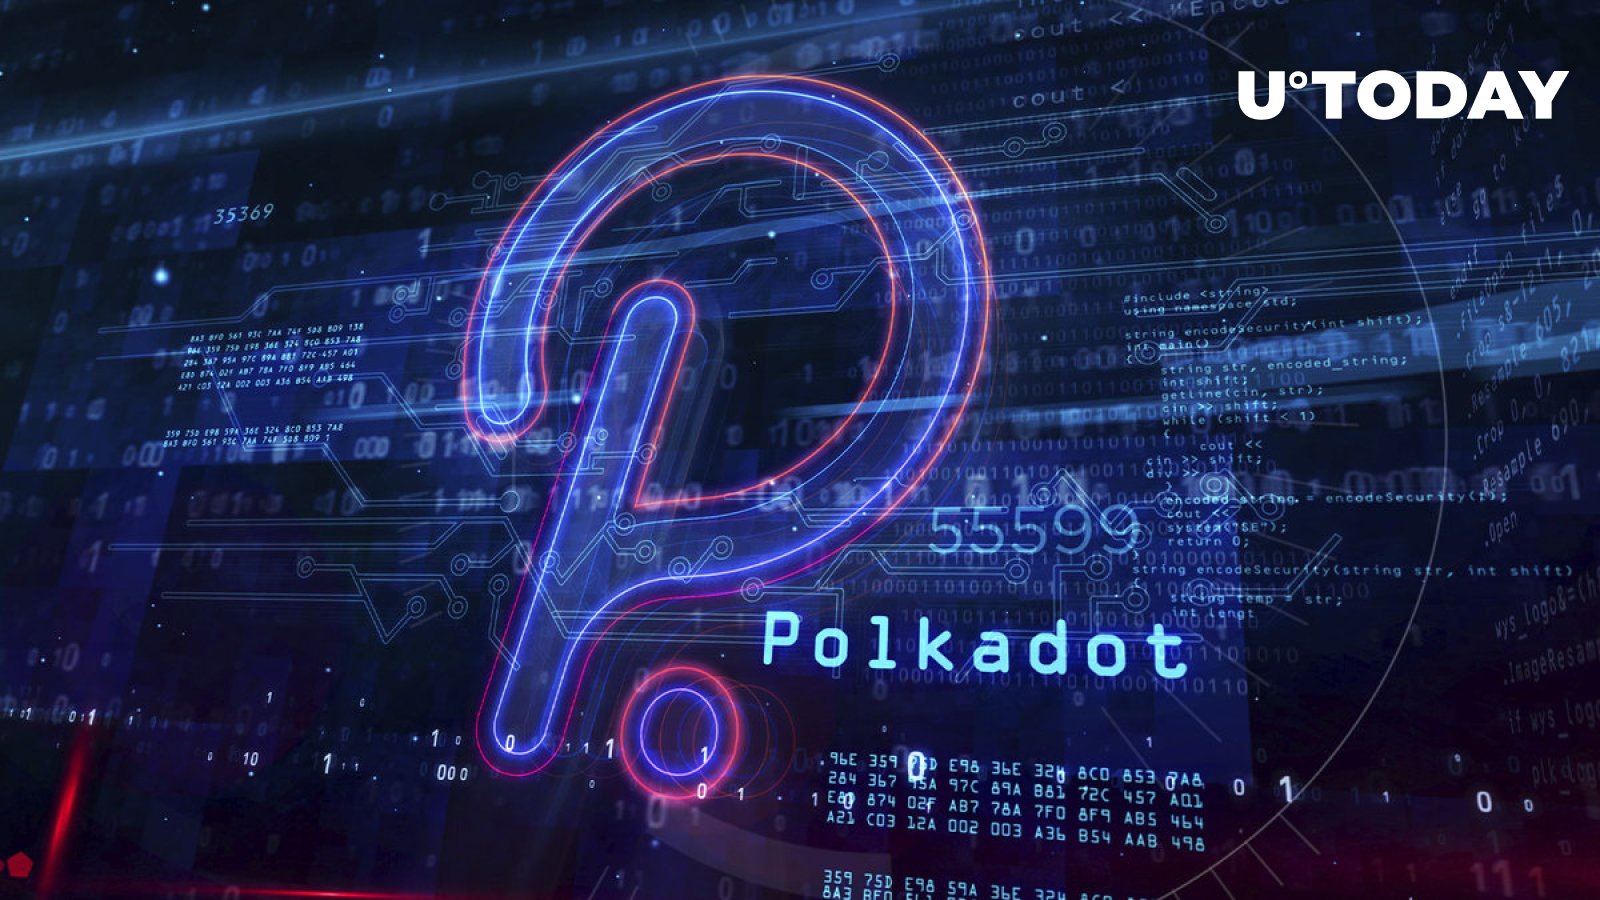 Polkadot Alliance Goes Live to Establish Code of Ethics